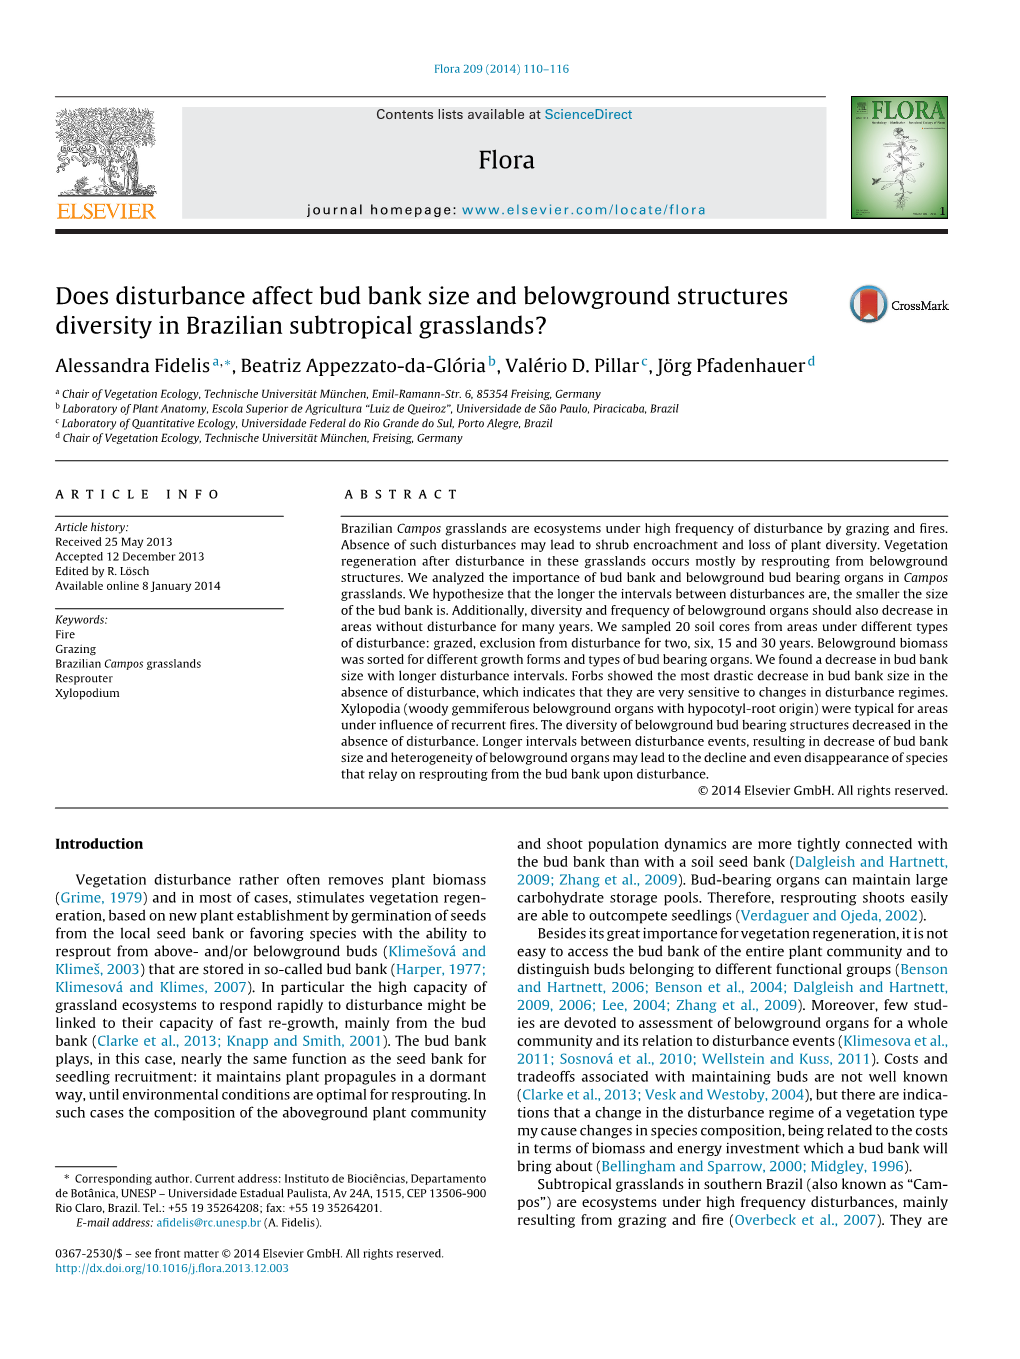 Does Disturbance Affect Bud Bank Size and Belowground Structures Diversity in Brazilian Subtropical Grasslands?